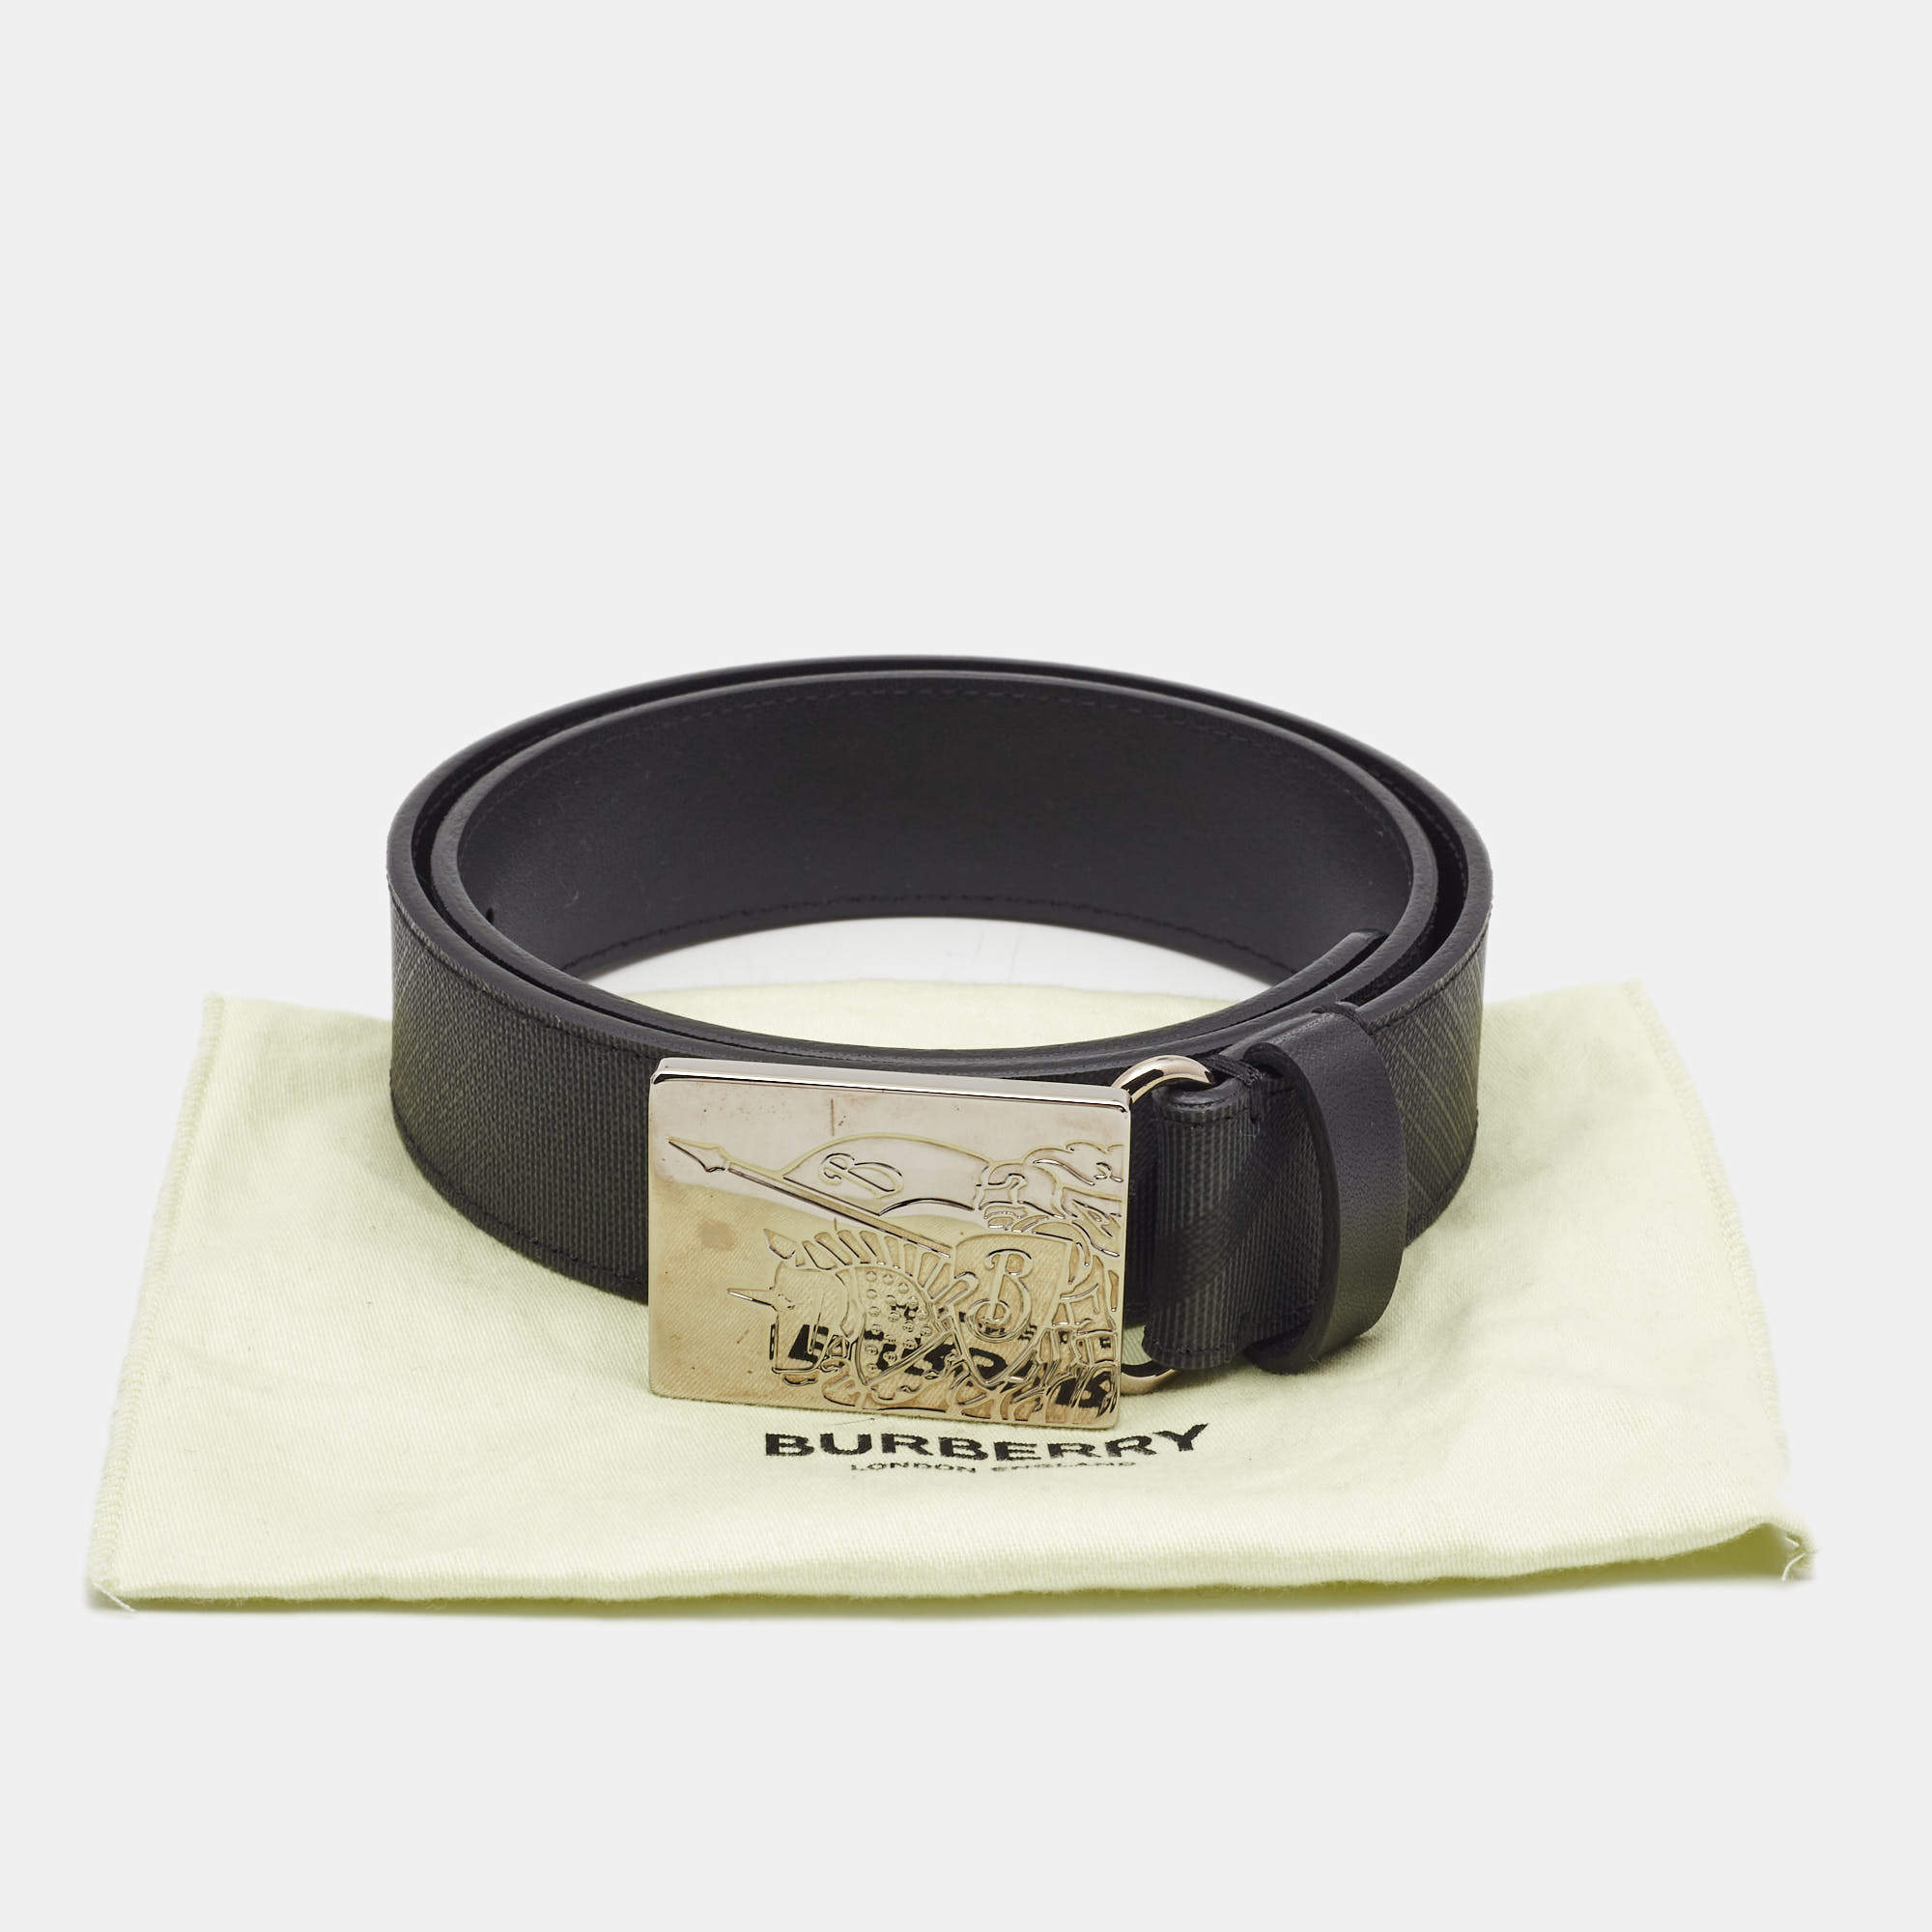 Burberry BELT B46-75 38MM BLACK - Luxuryeasy